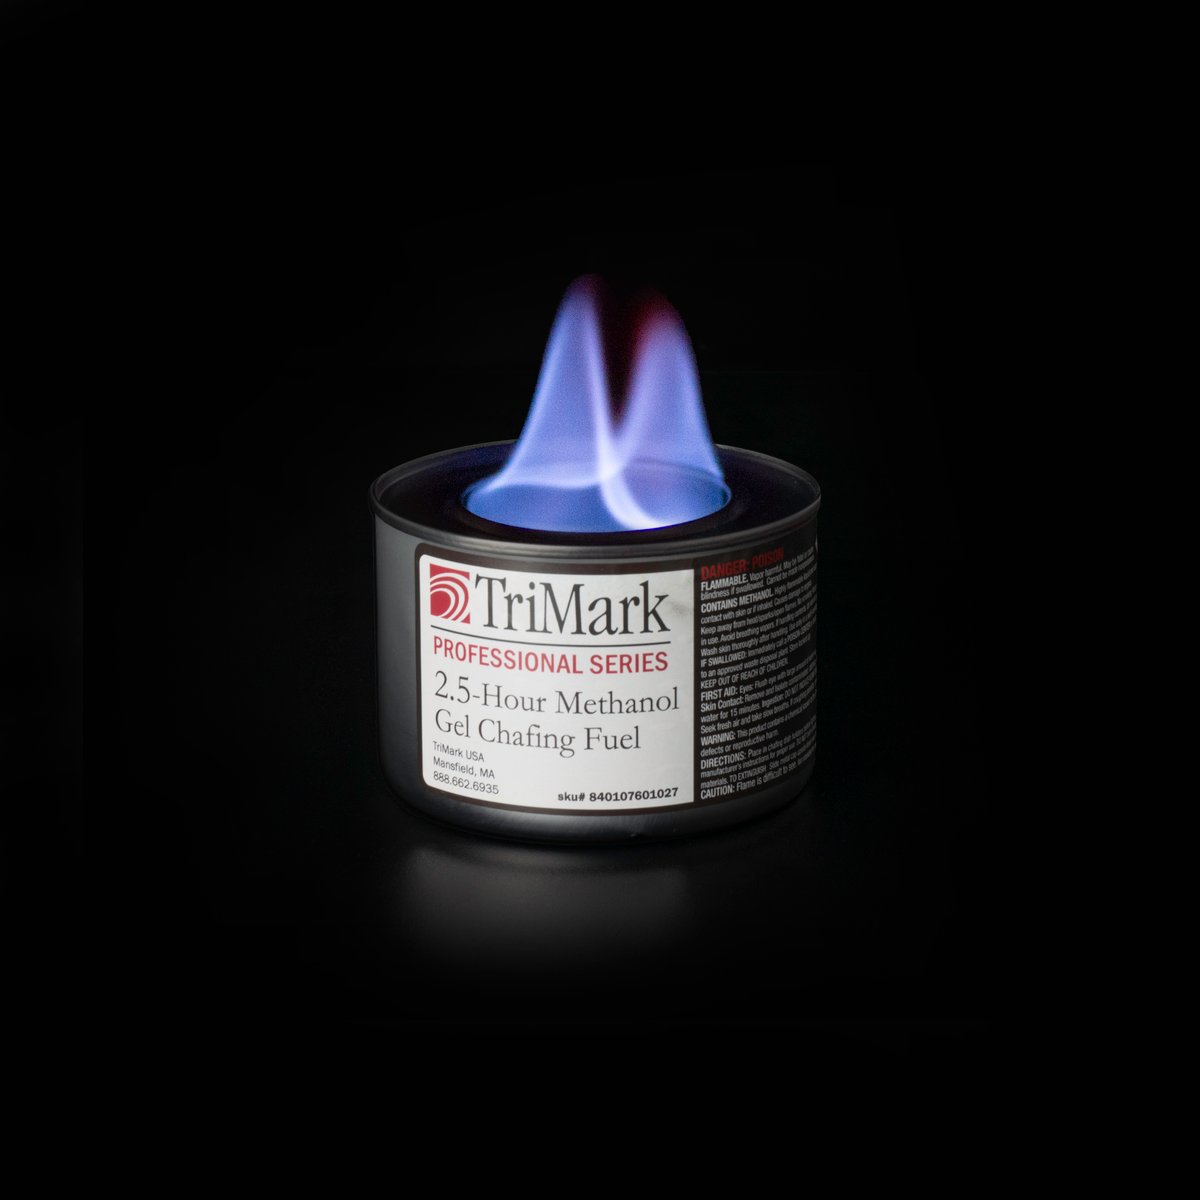 TriMark Professional Chafing Fuel,  Methanol, Blue Gel Heat  Burn Time: 2.5 hour  SKU:840107601027